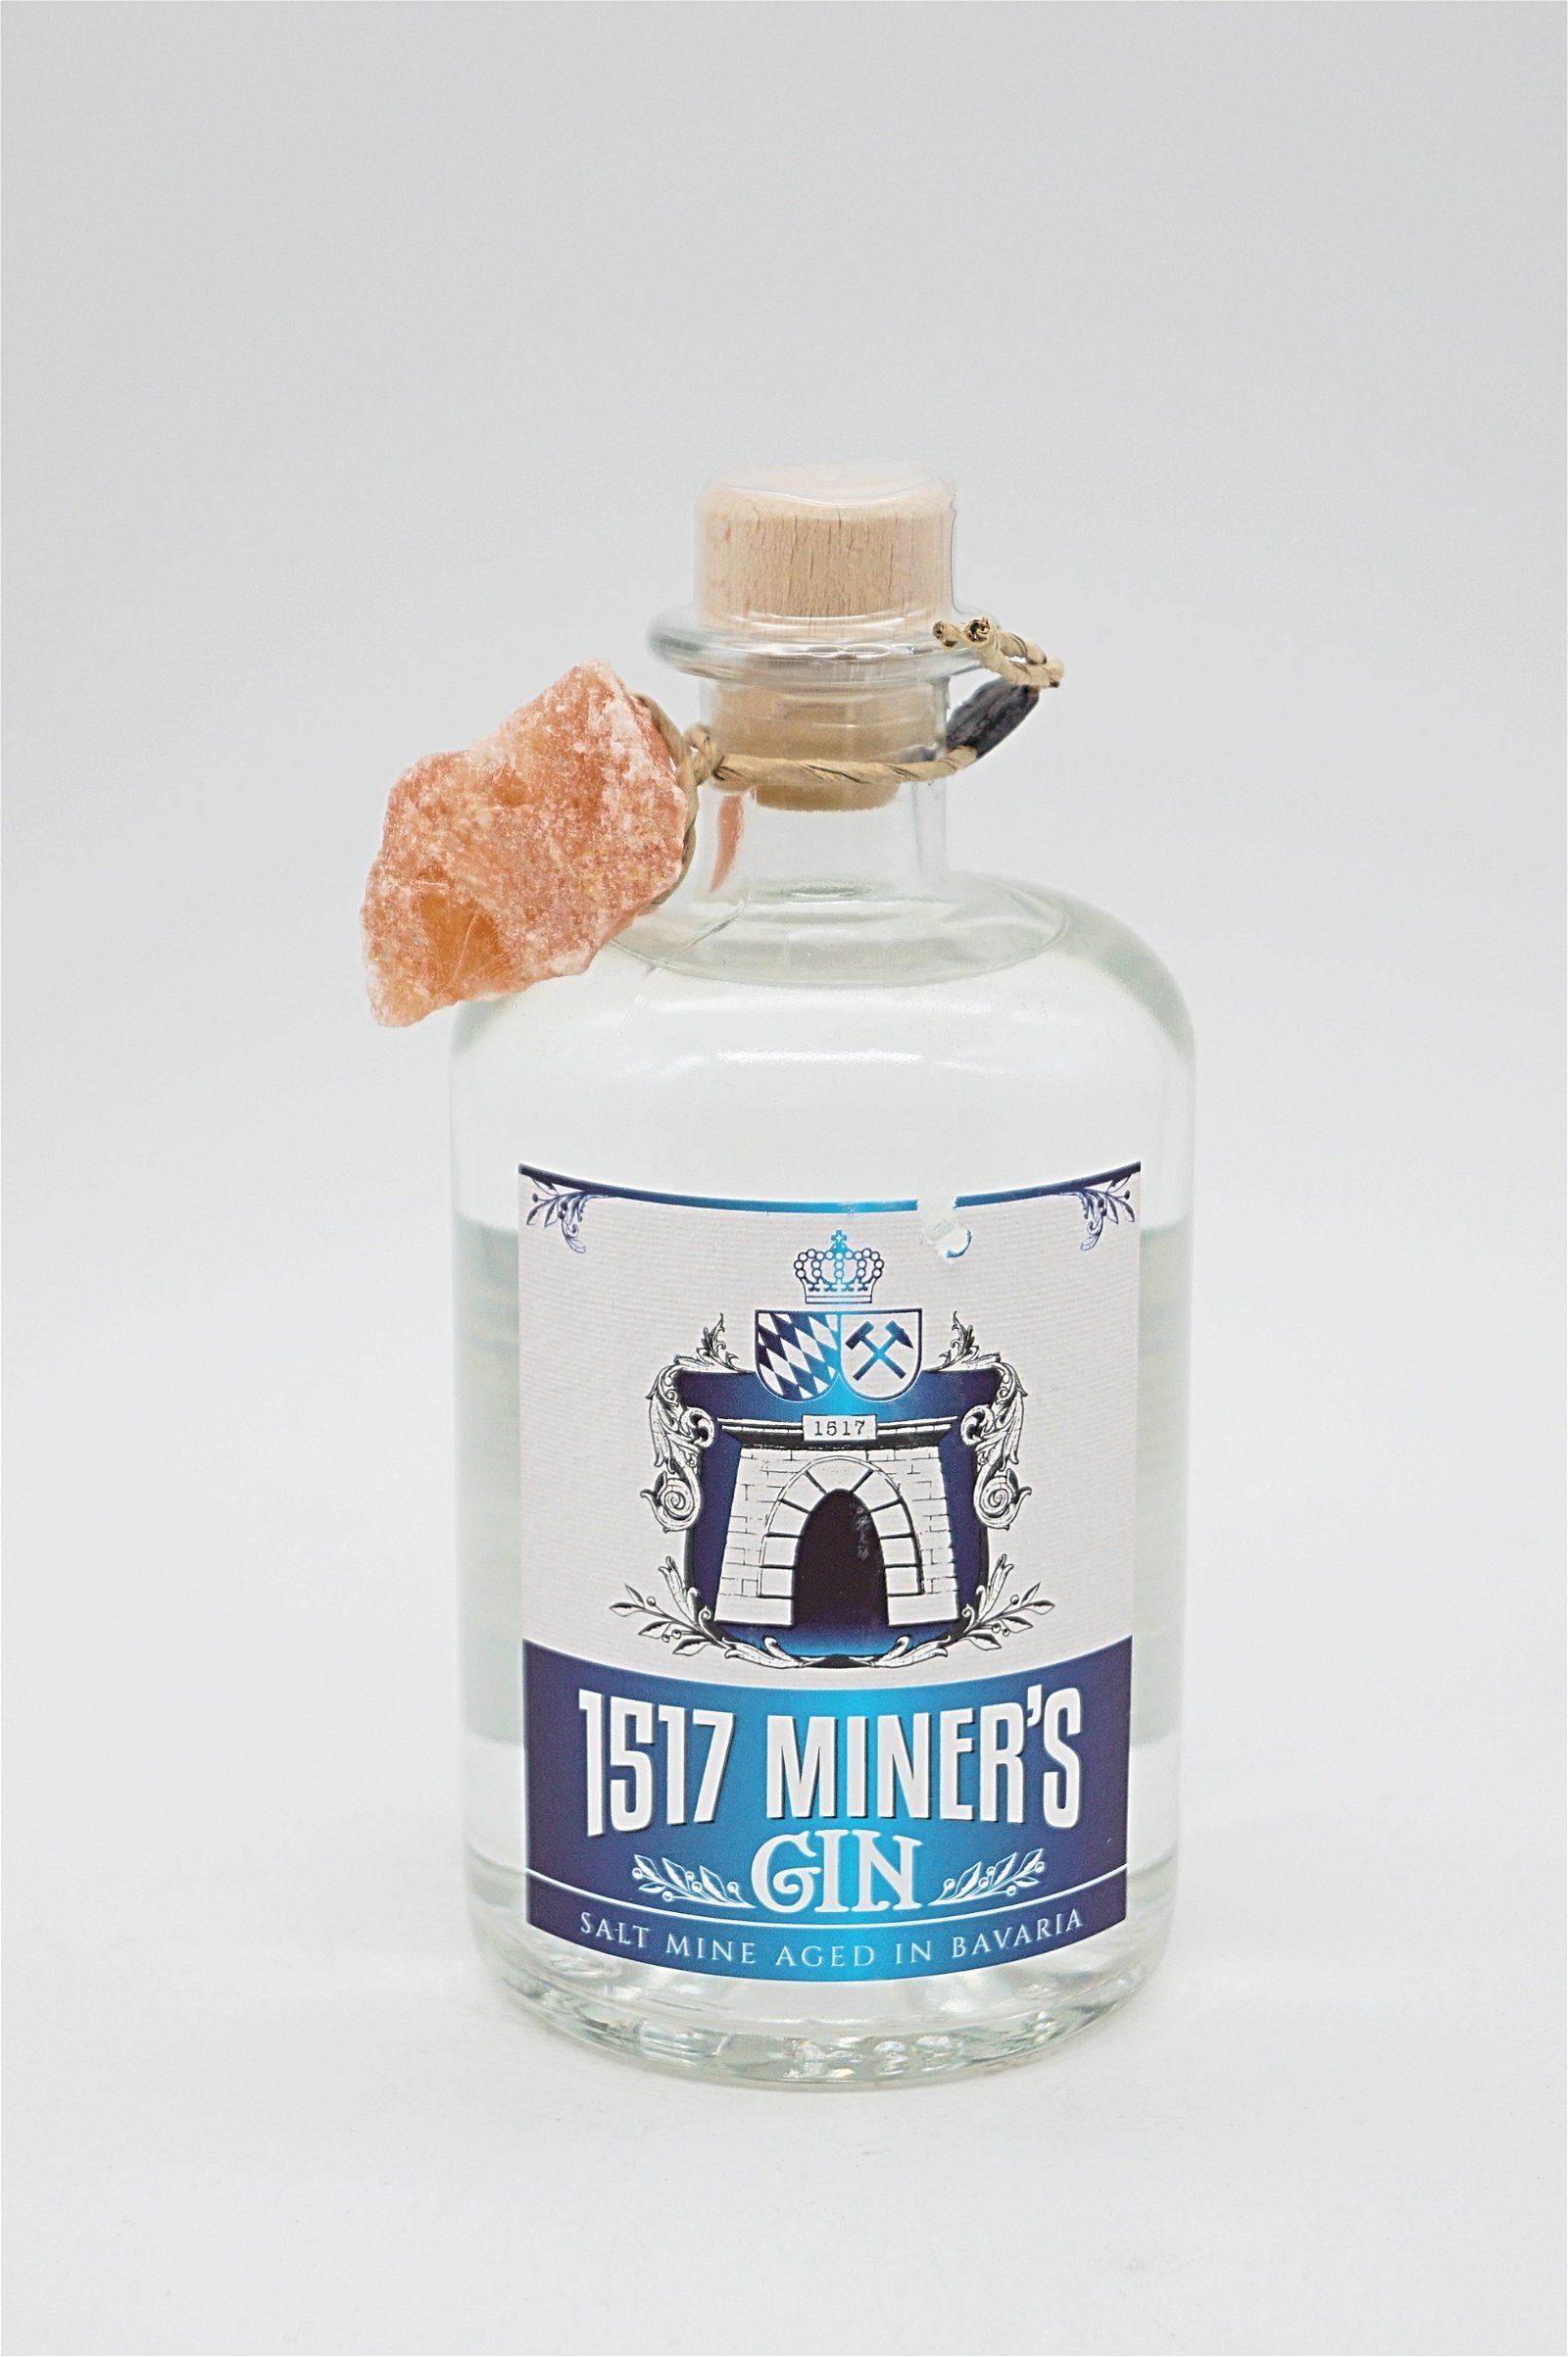 1517 Miners Gin